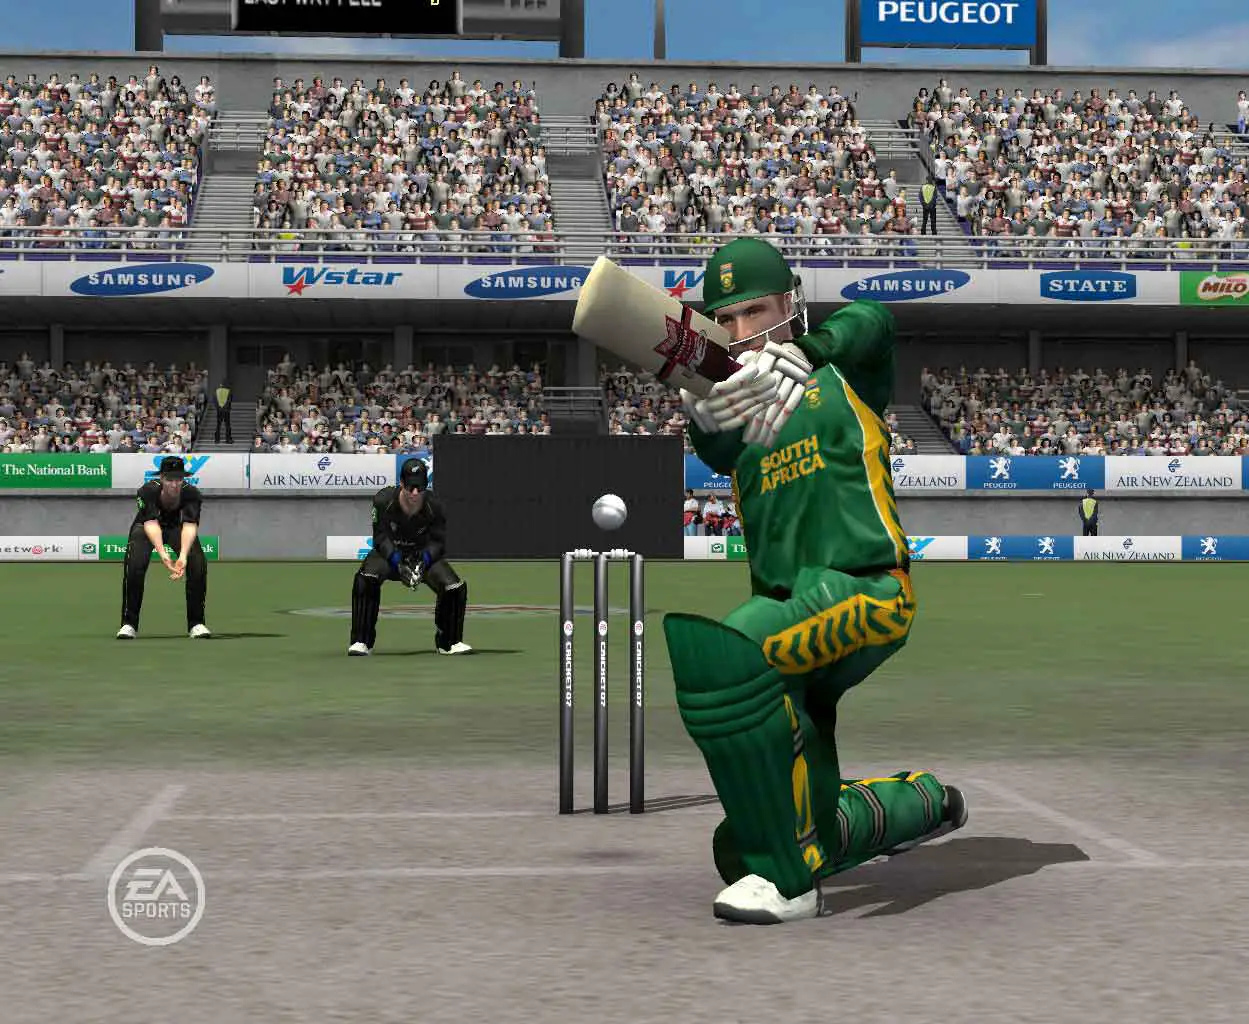 Live match 7. Крикет игра. EA Cricket 07 game. Крикет игра на ПК. Крикет скрин.